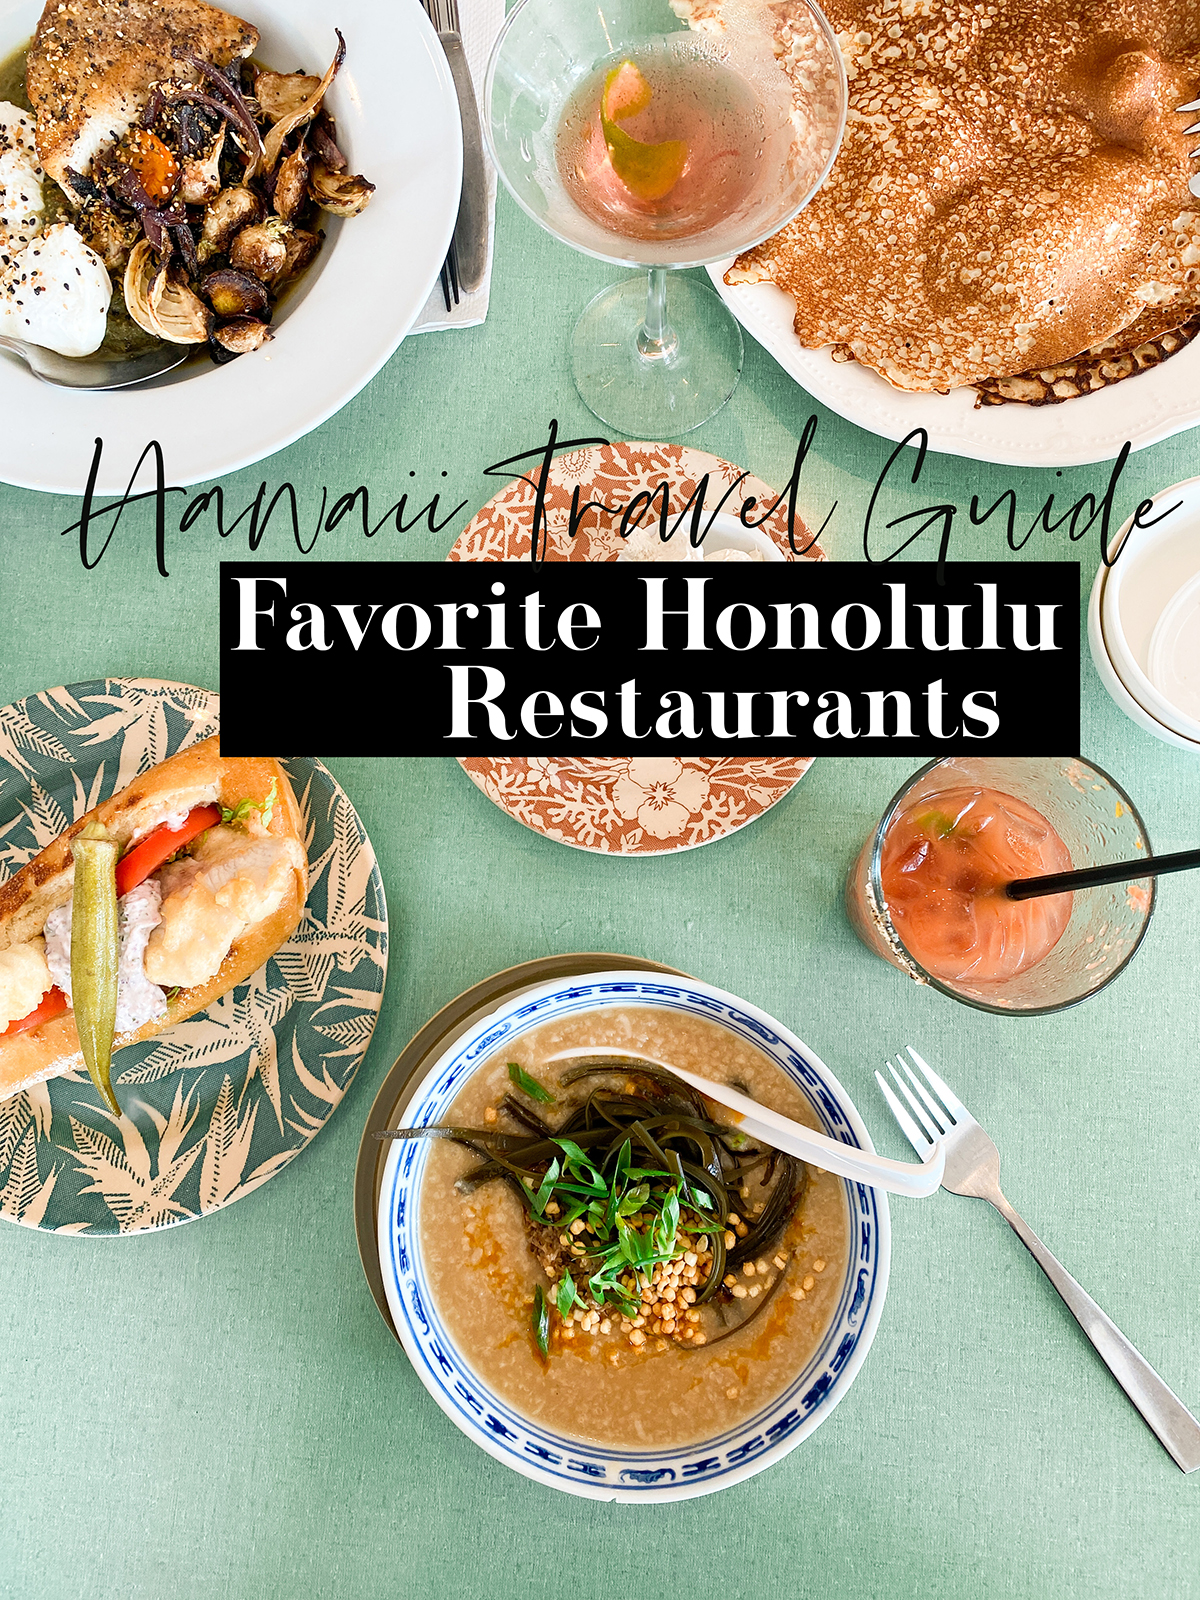 Best restaurants in Waikiki and Honolulu!